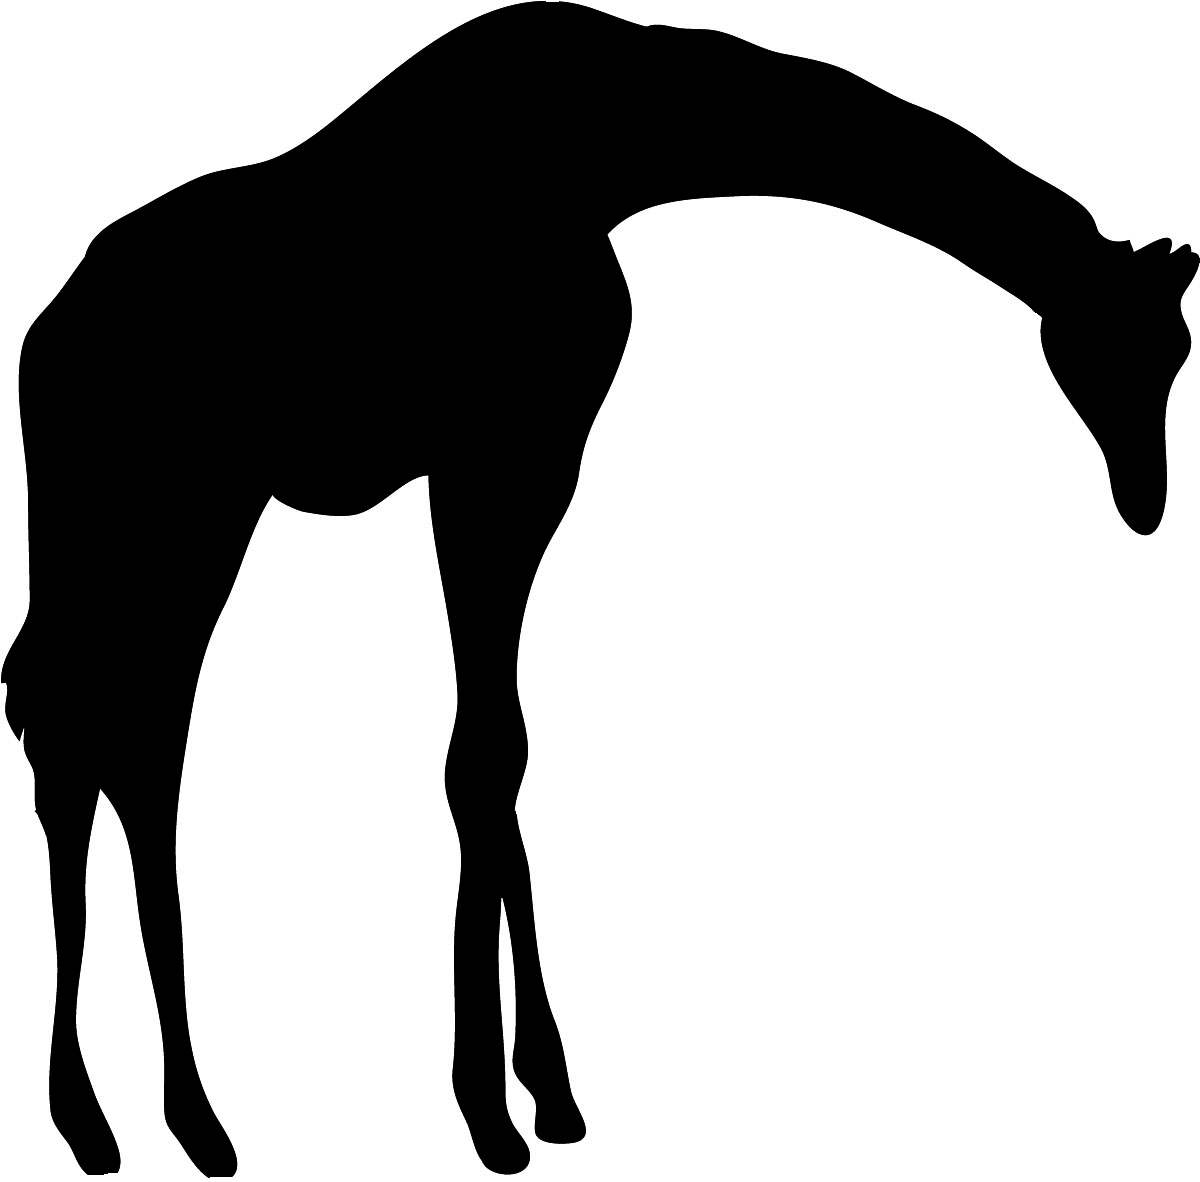 Giraffe Silhouette Clip Art - Free Clipart Images